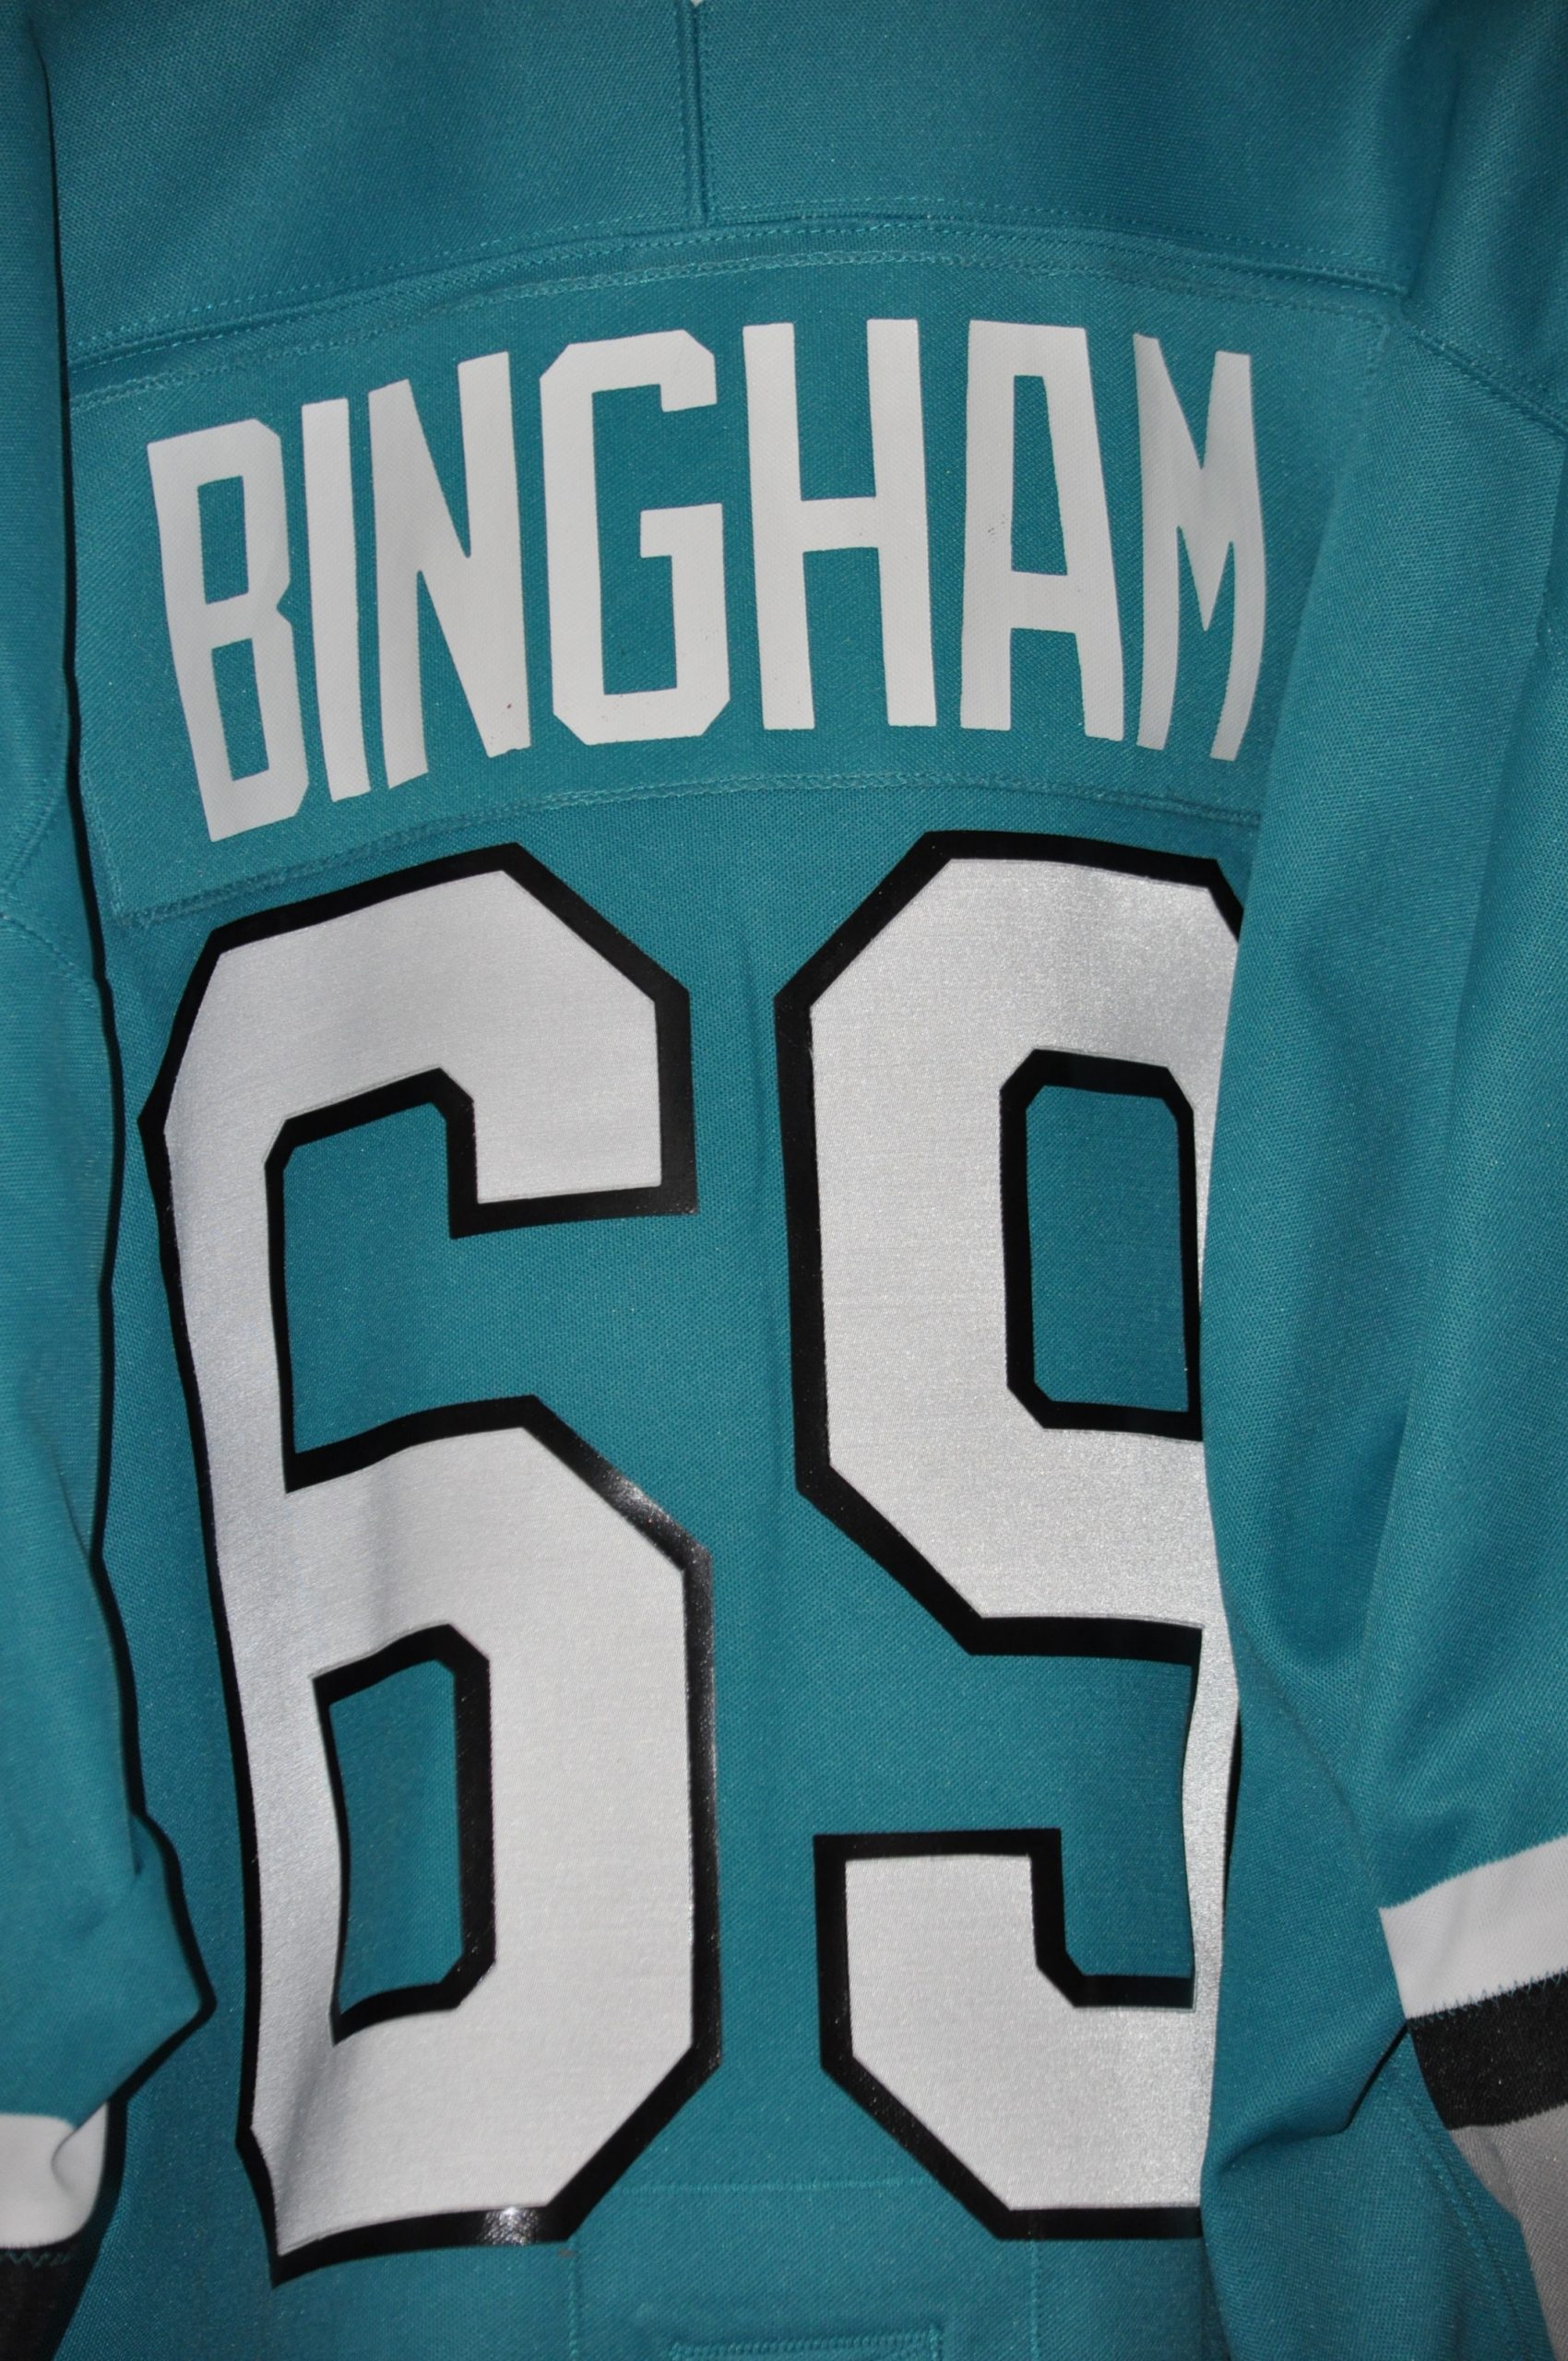 San Jose Sharks Bingham Teal preseason jersey. #69 “No Longer in